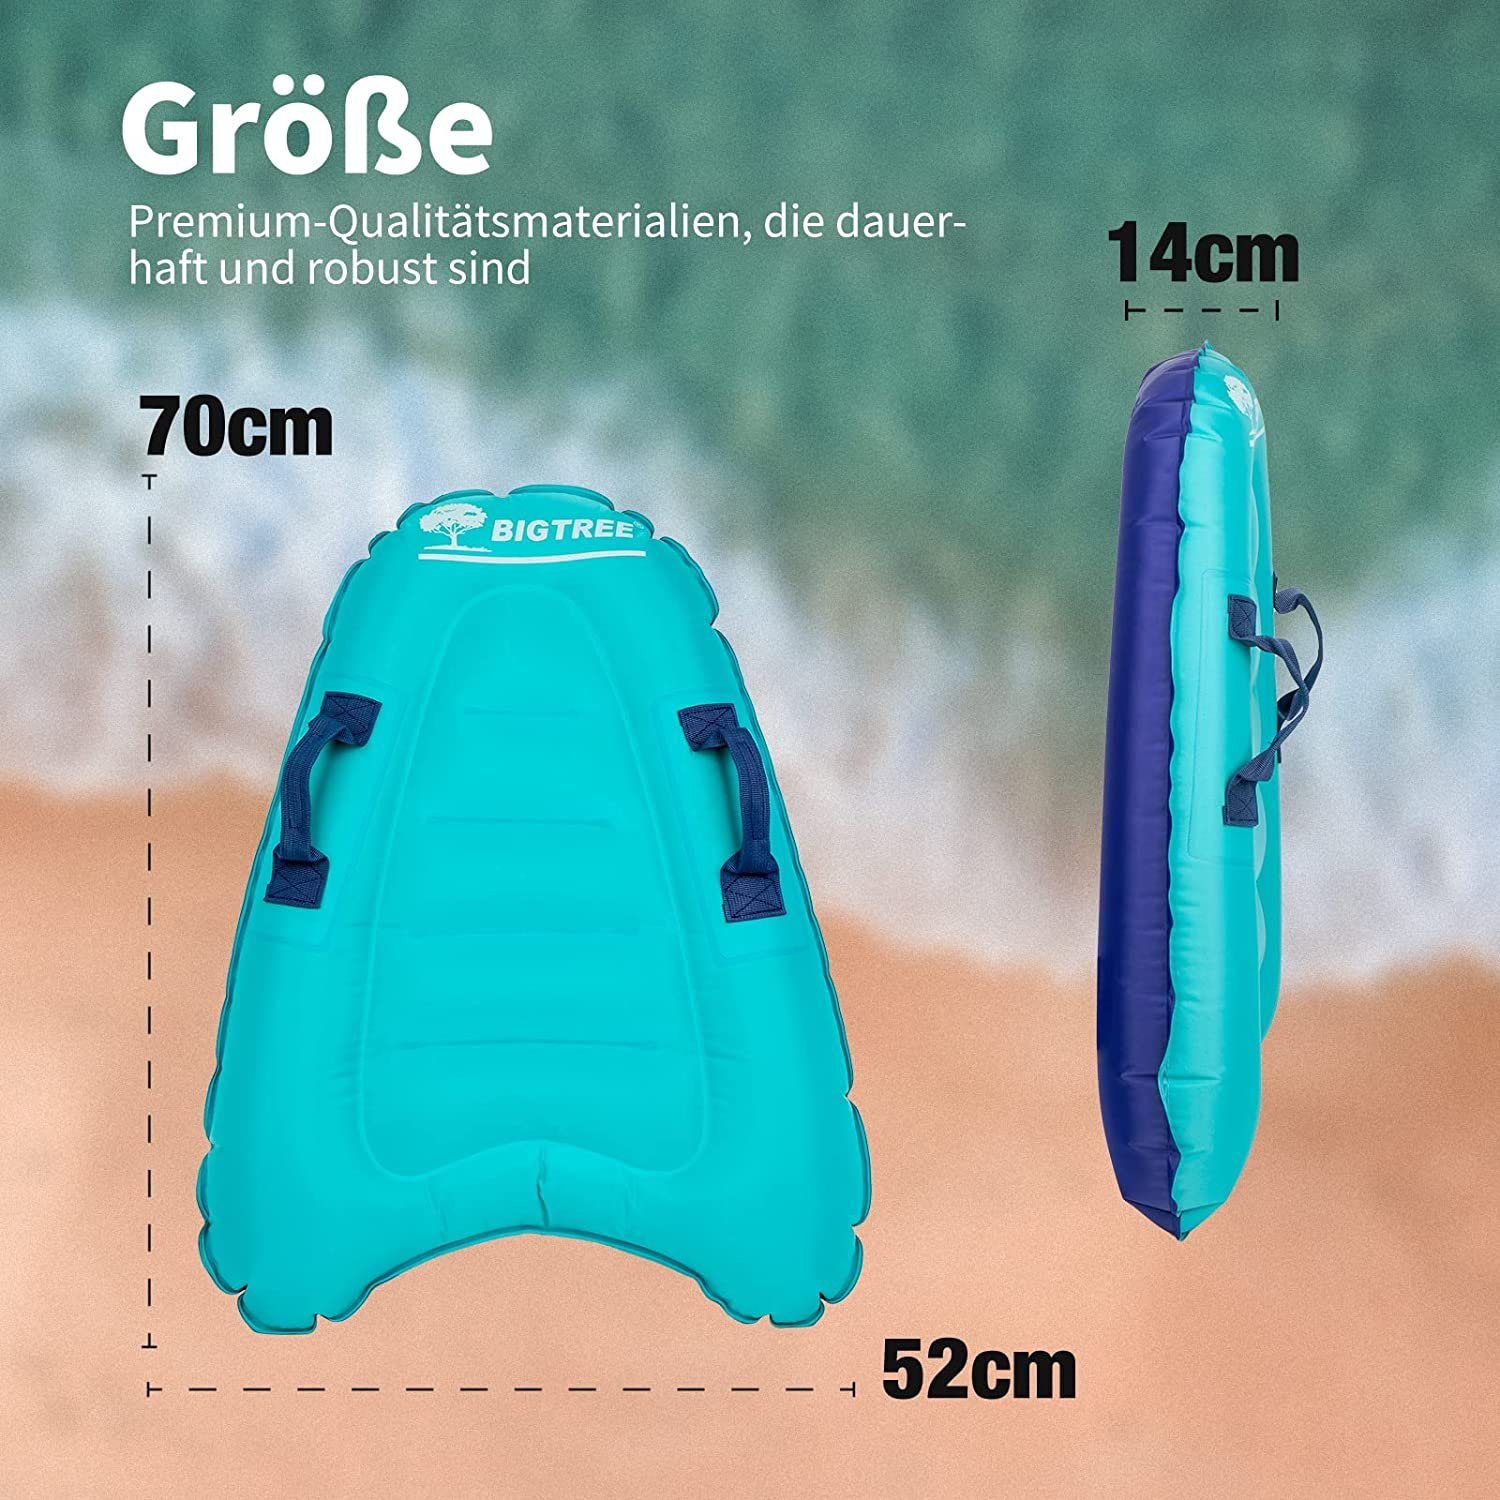 KAHOO Inflatable SUP-Board Aufblasbares 52x14x70cm, Schwimmhilfe Bodyboard, Pure